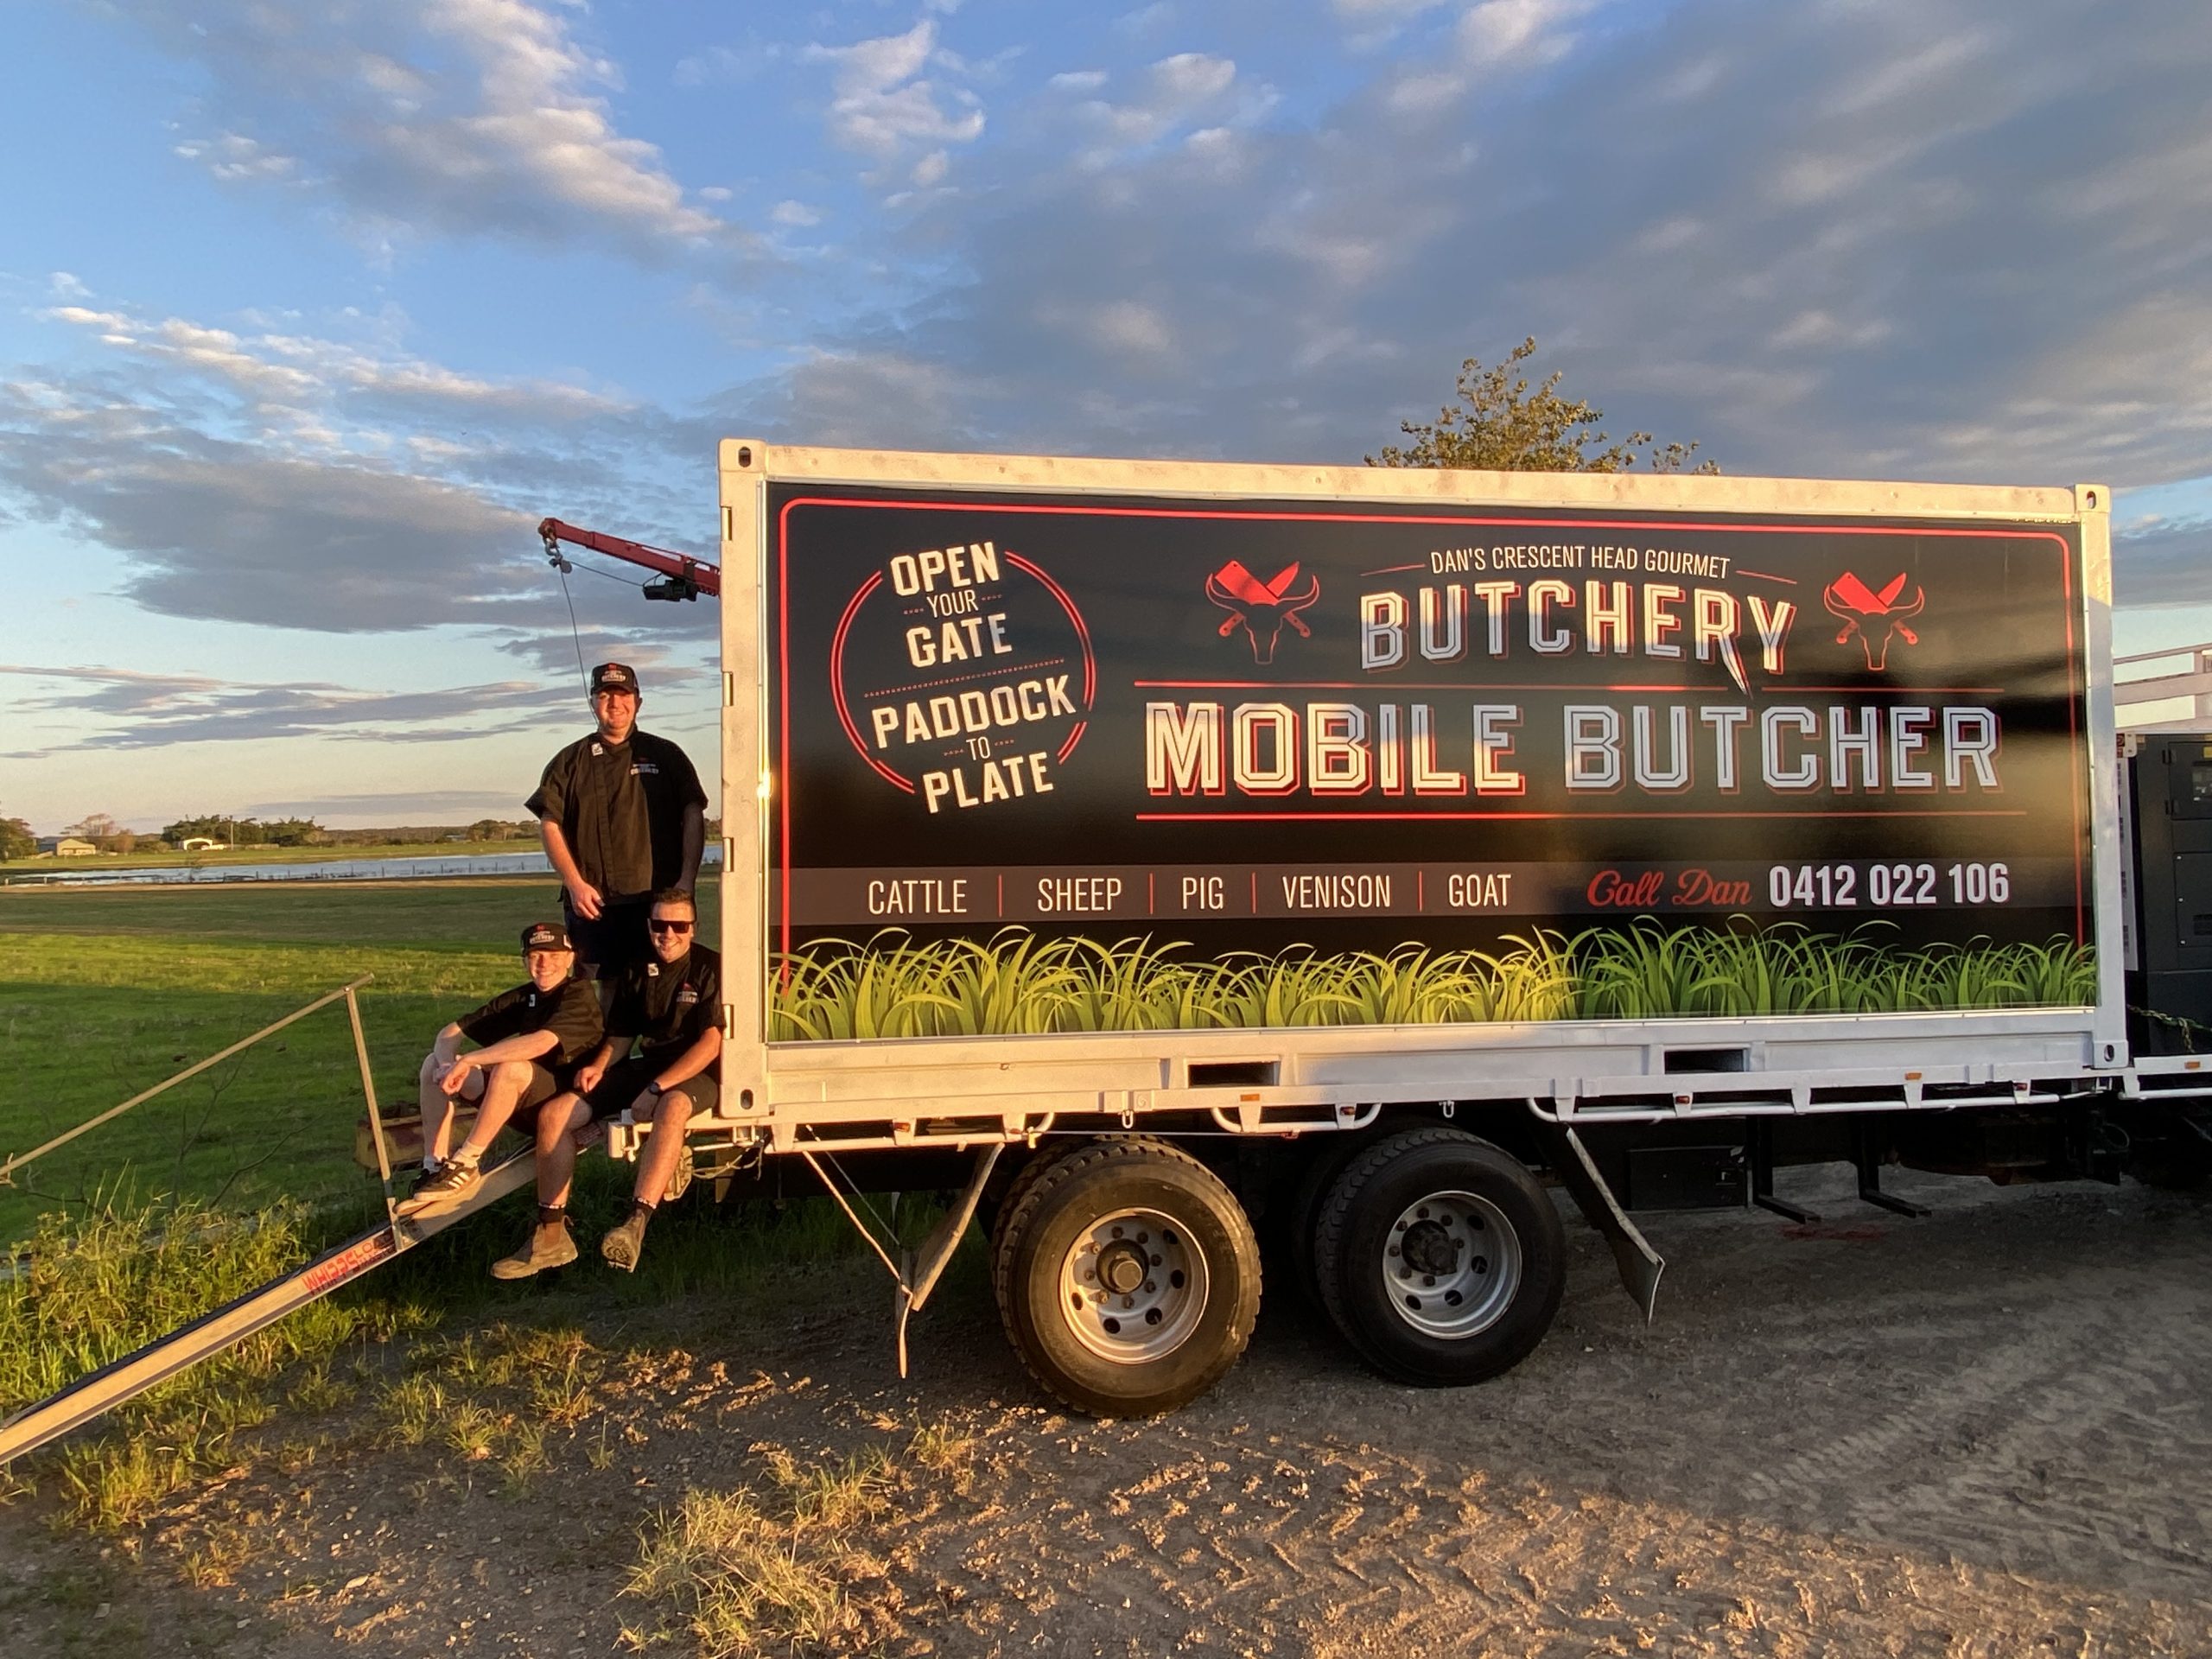 mobile butchery business plan